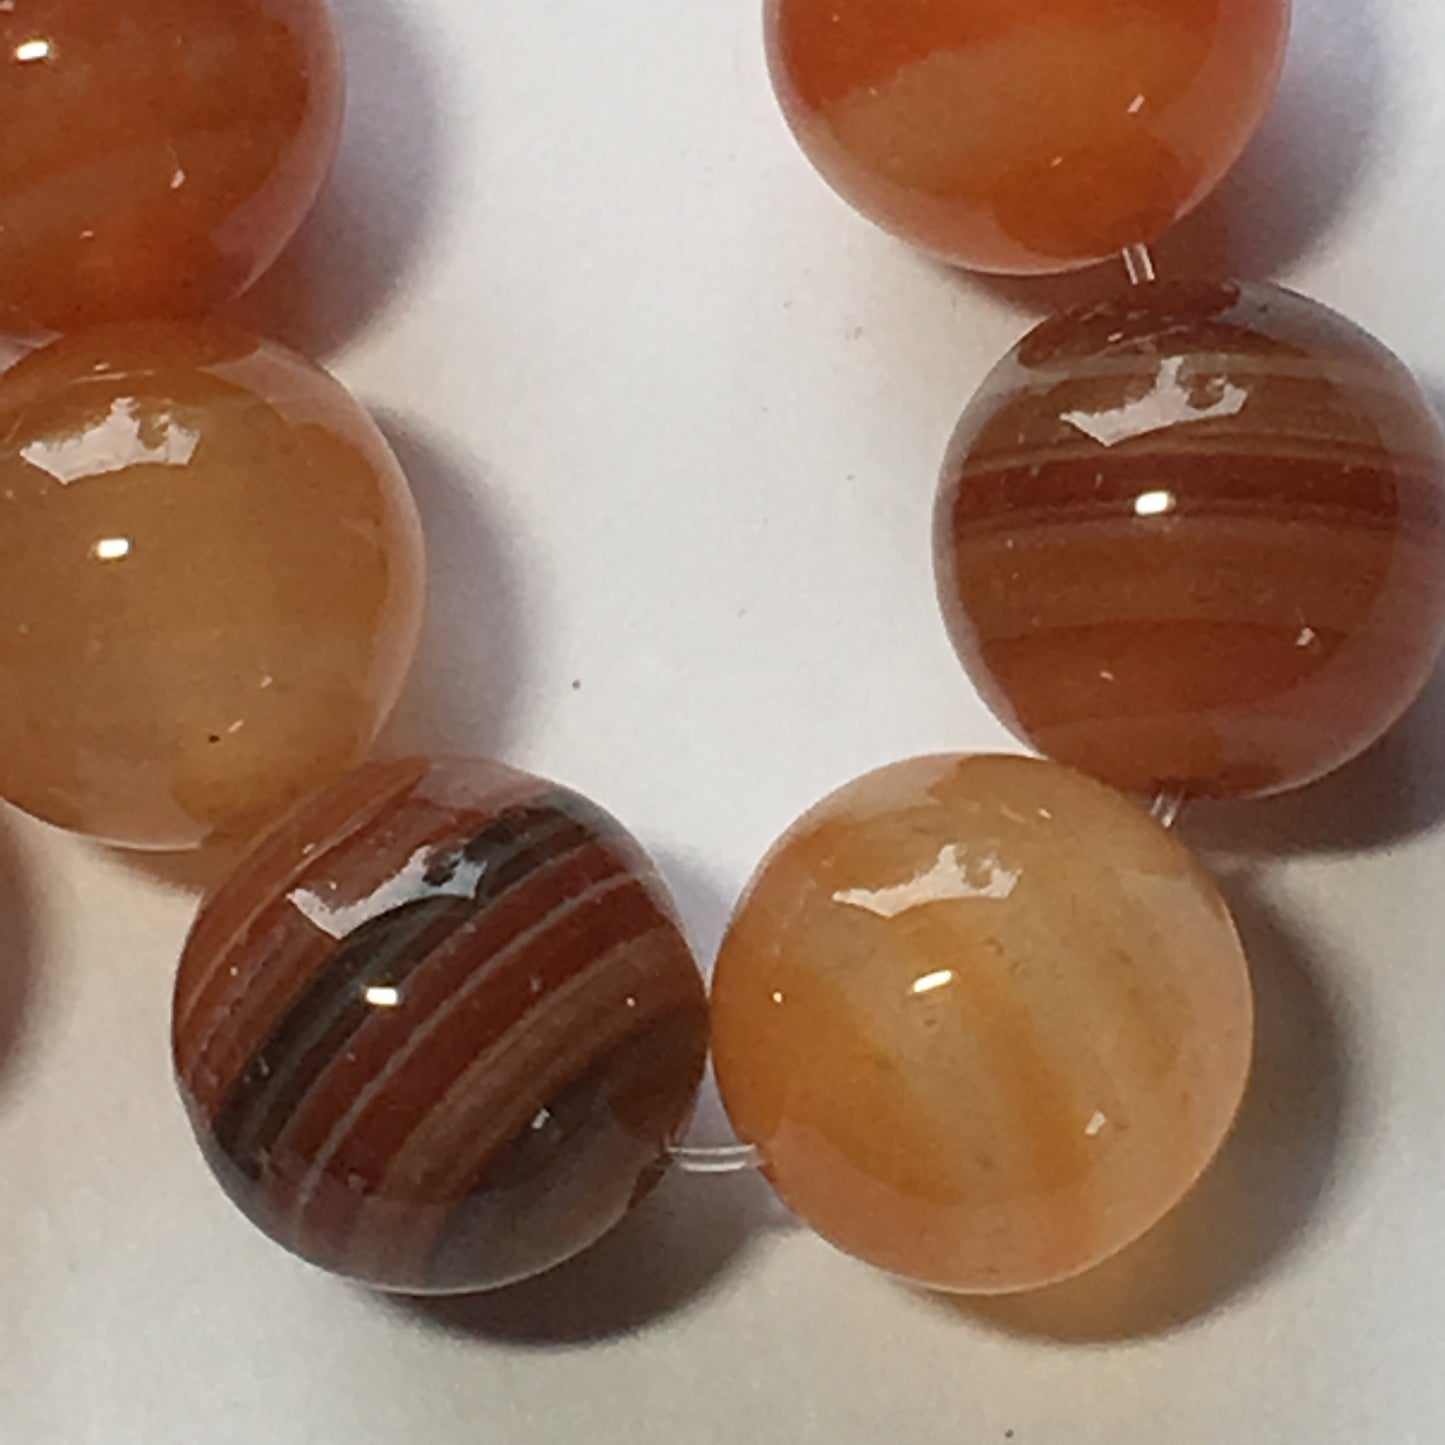 Orange Agate Semi-Precious Stone Round Beads, 10 mm - 21 Beads